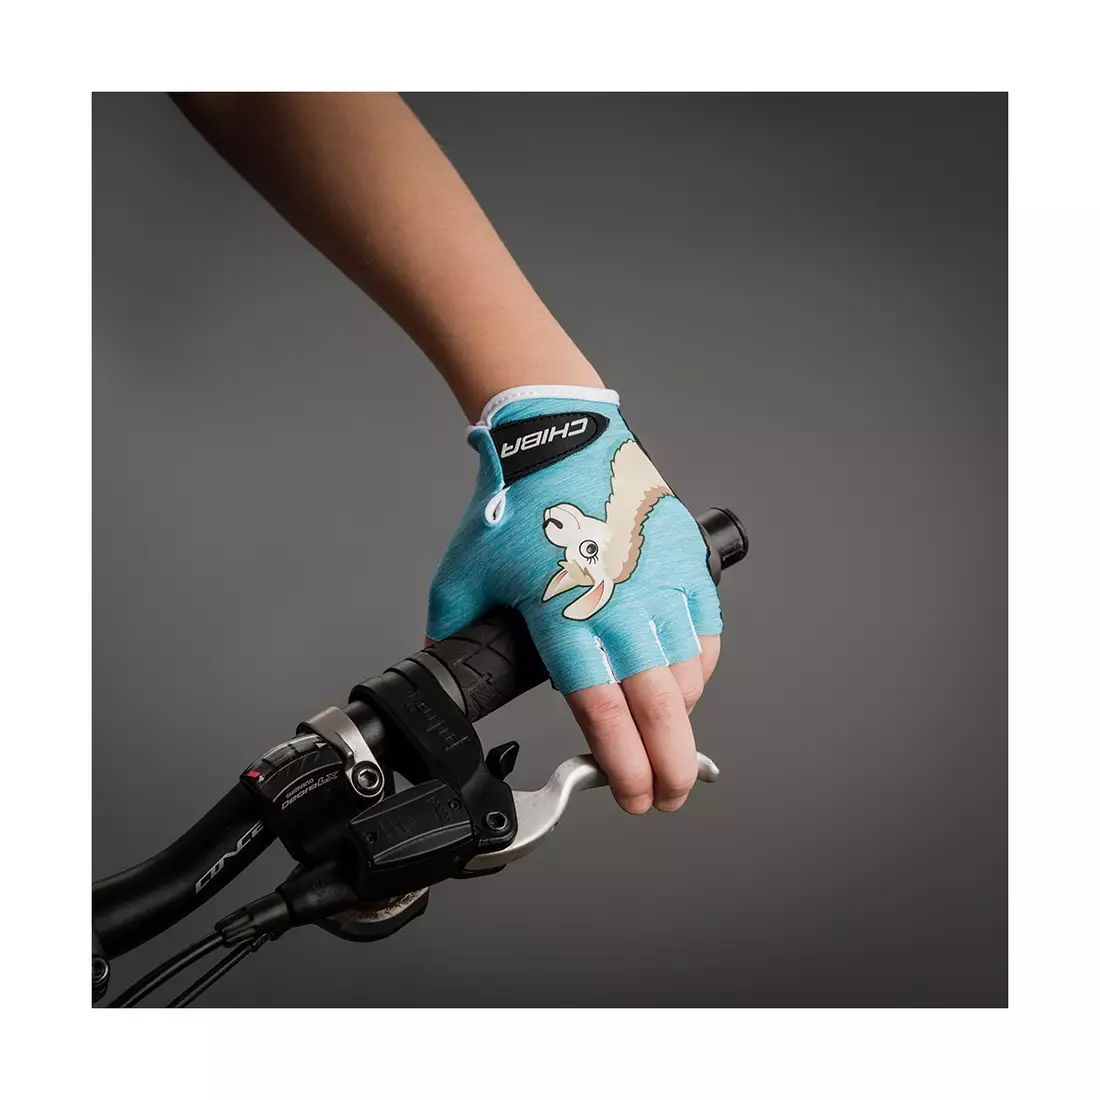 CHIBA COOL KIDS children's cycling gloves blue / llama